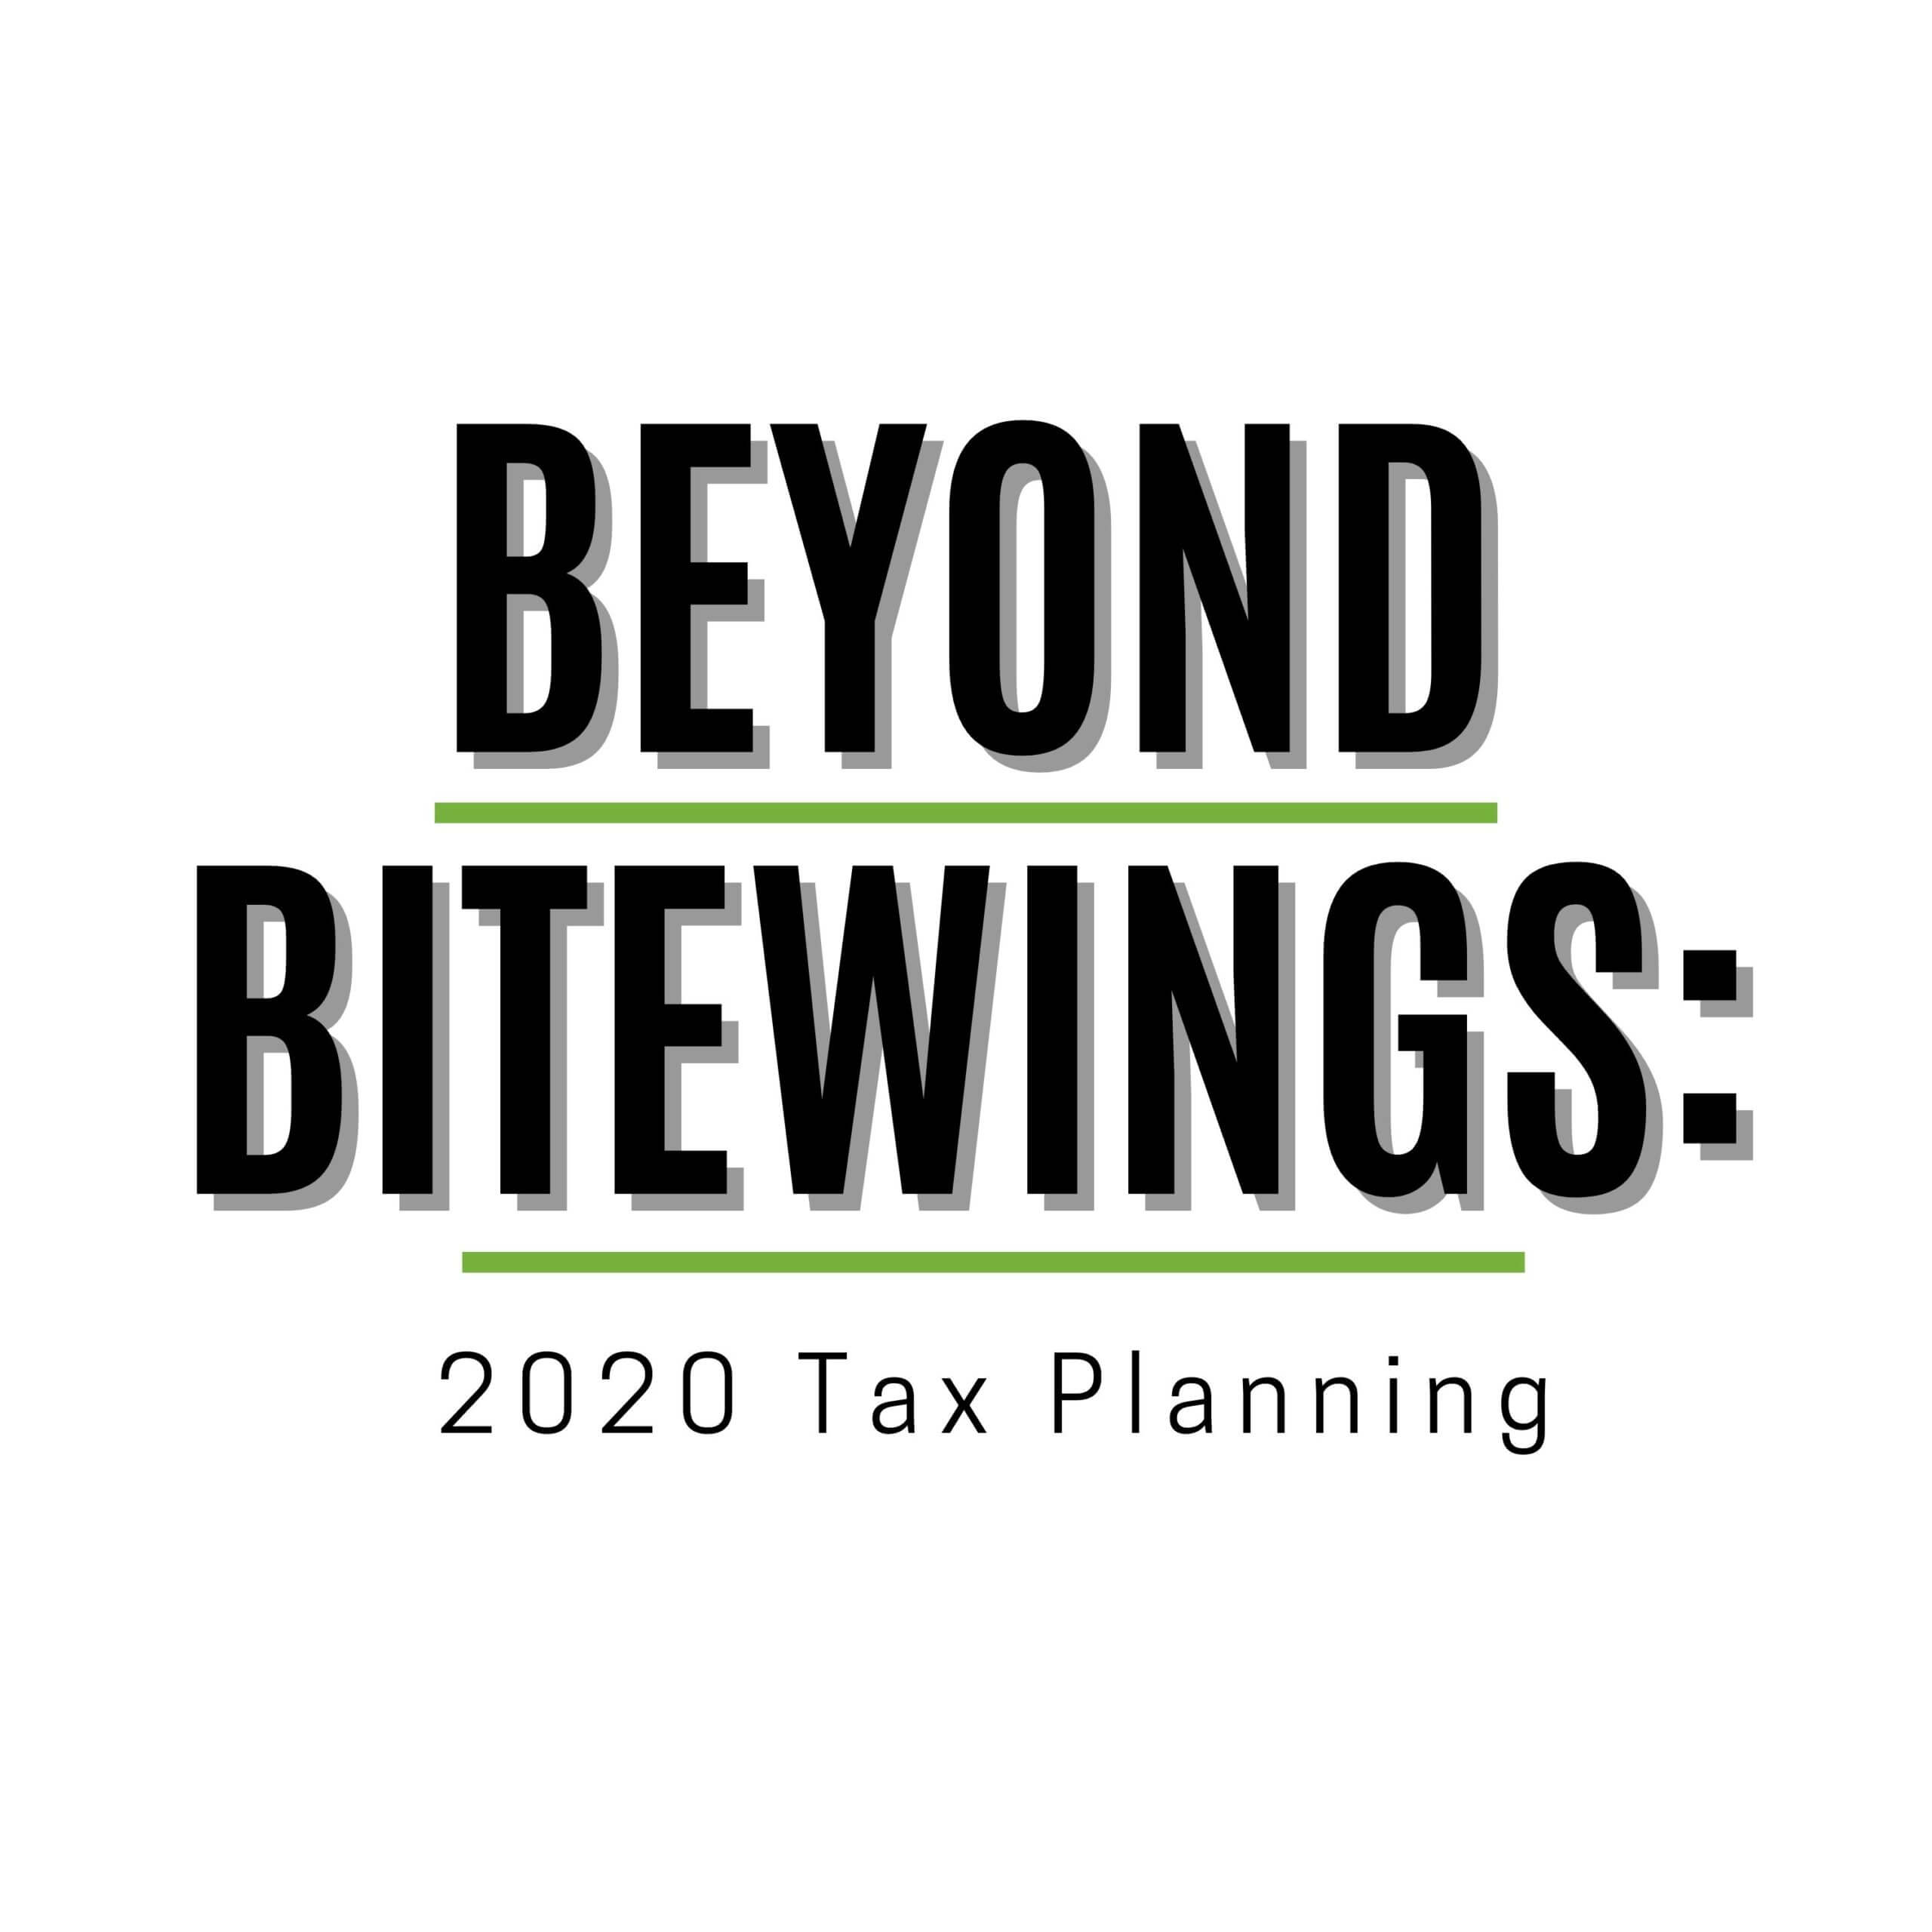 Beyond Bitewings 2020 Tax Planning